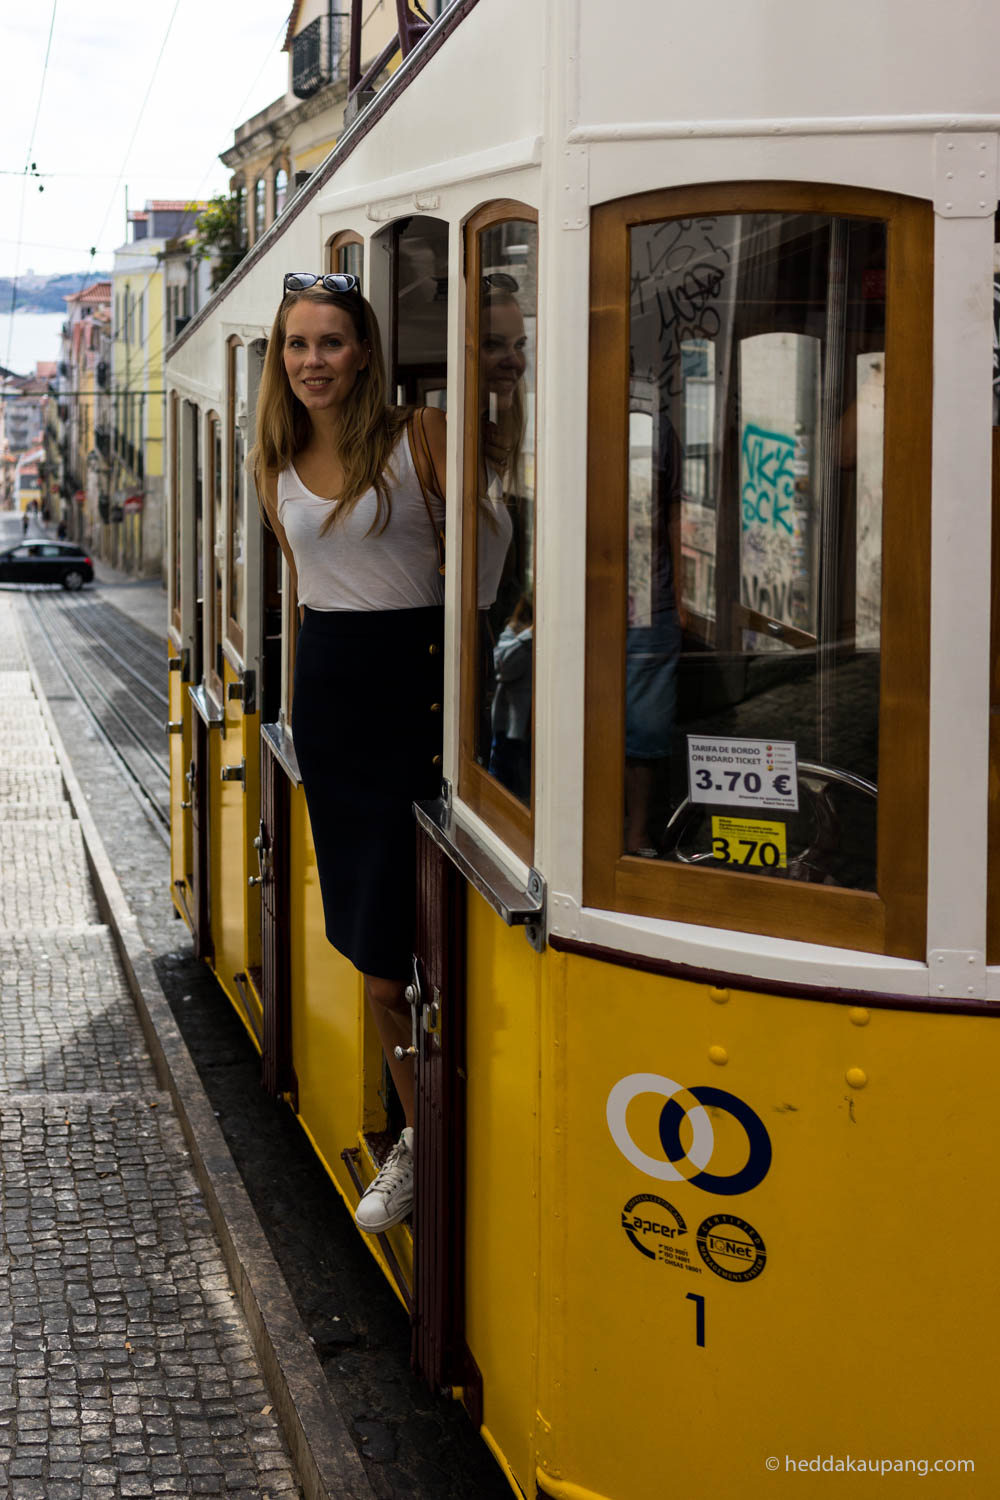 The yellow tram in Lisbon